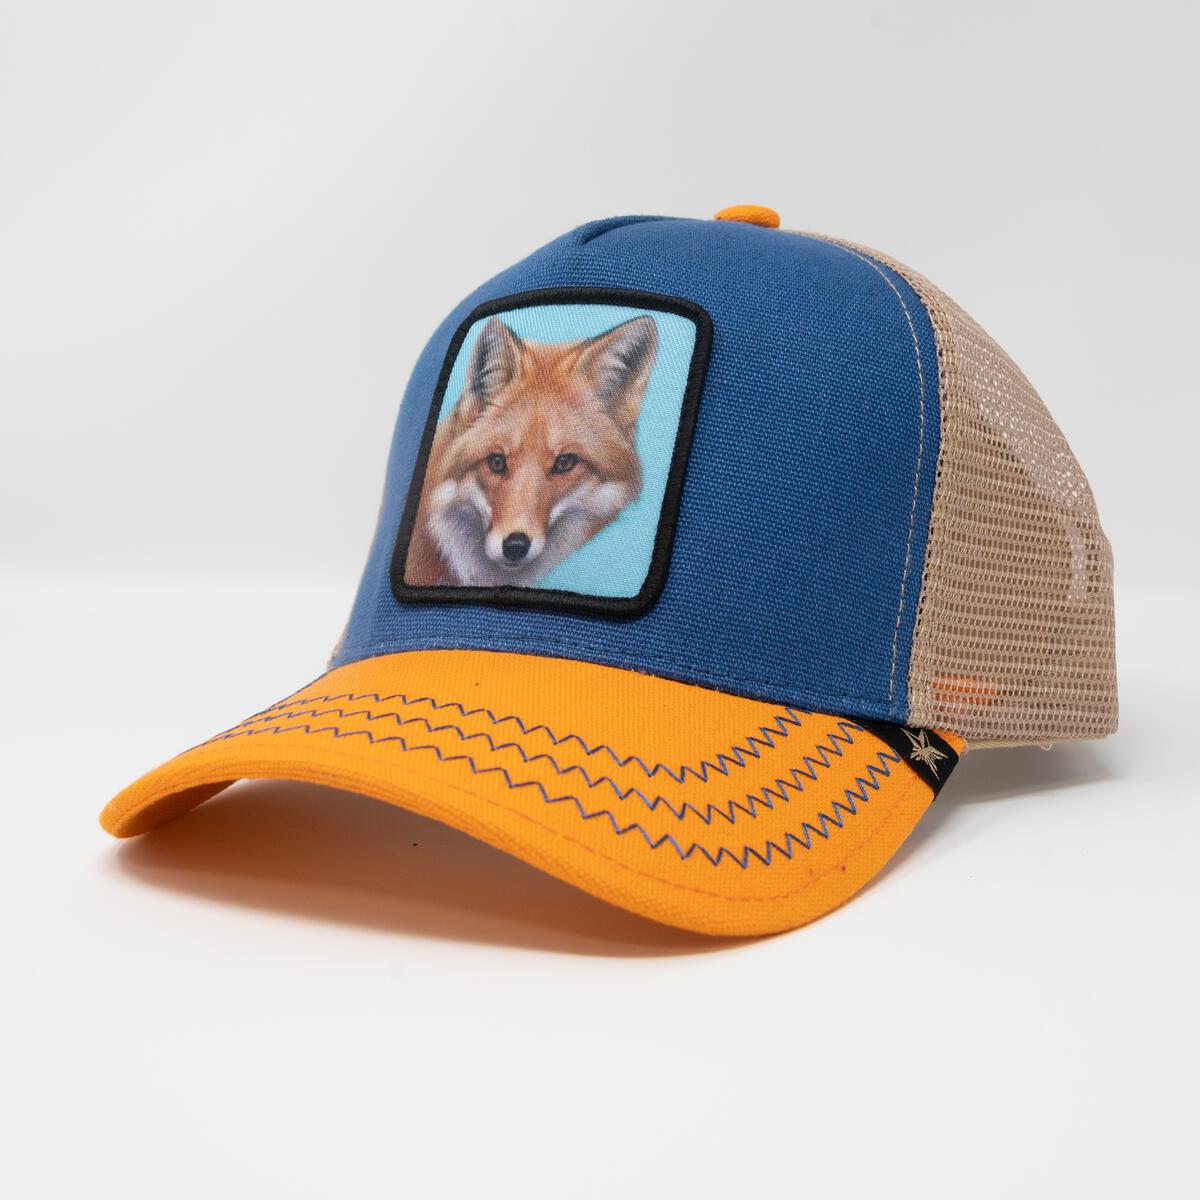 GOLD STAR - FOX TRUCKER HAT - BLUE/ORANGE/TAN